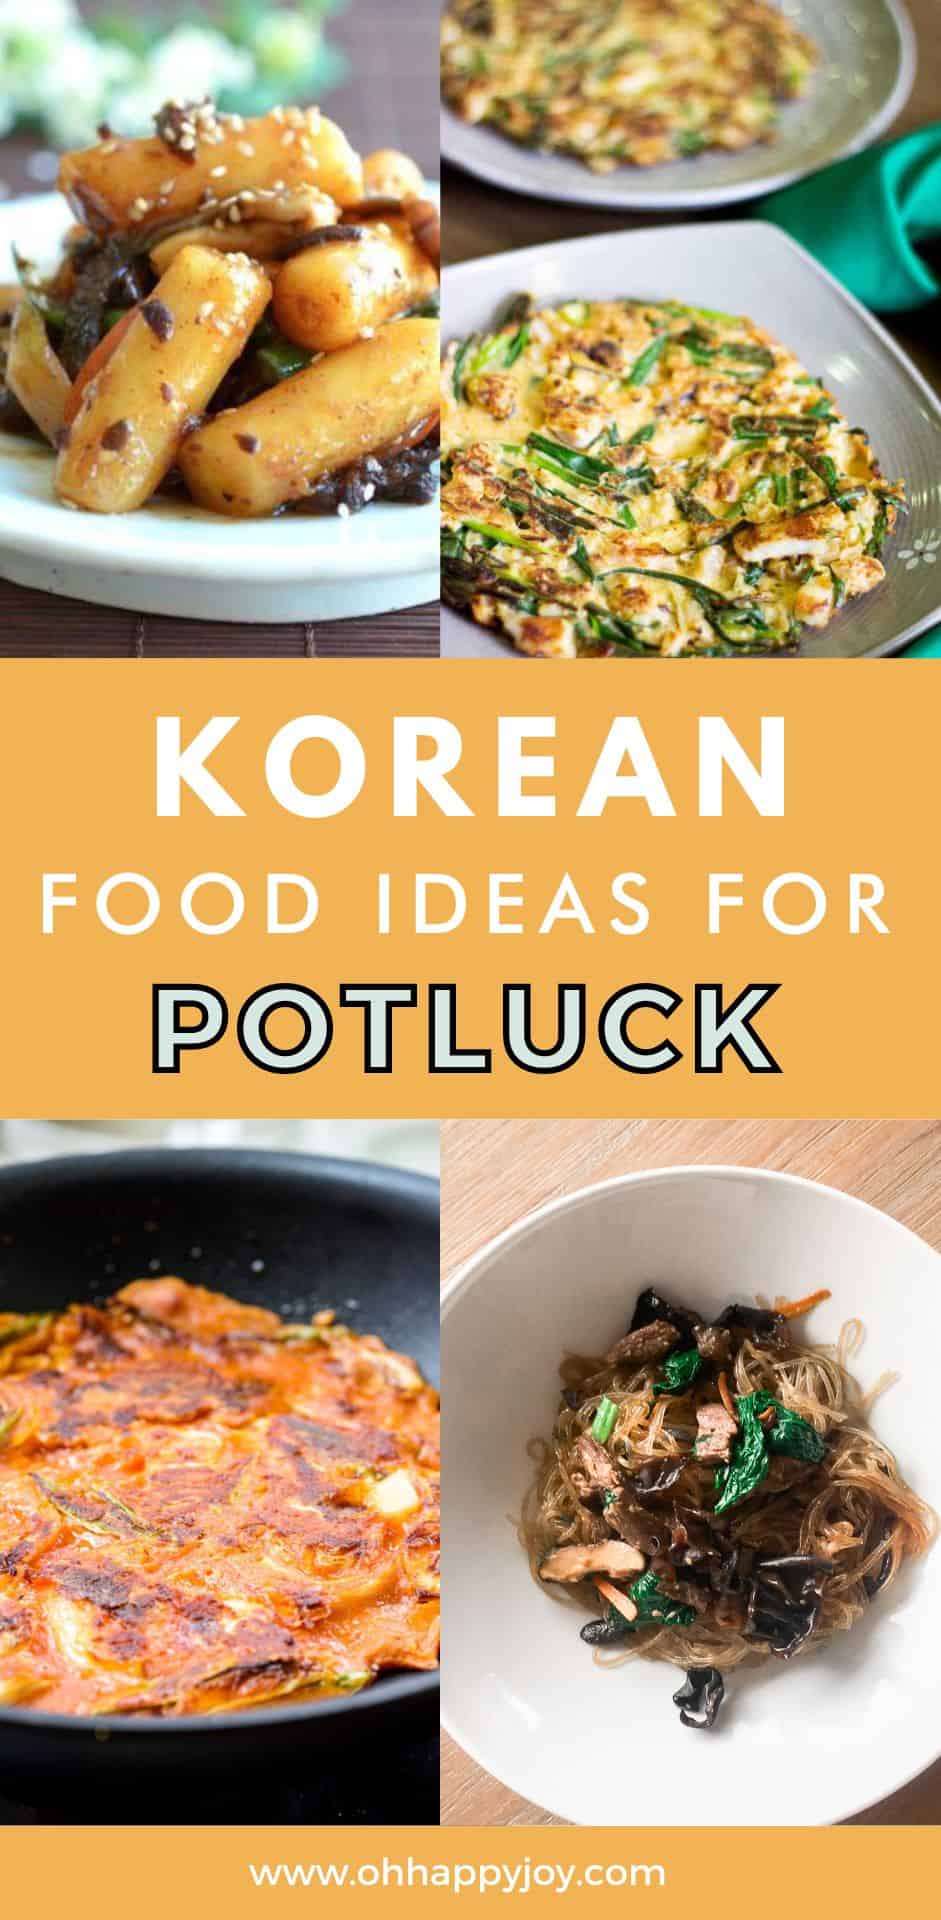 KOREAN FOOD FOR POTLUCK